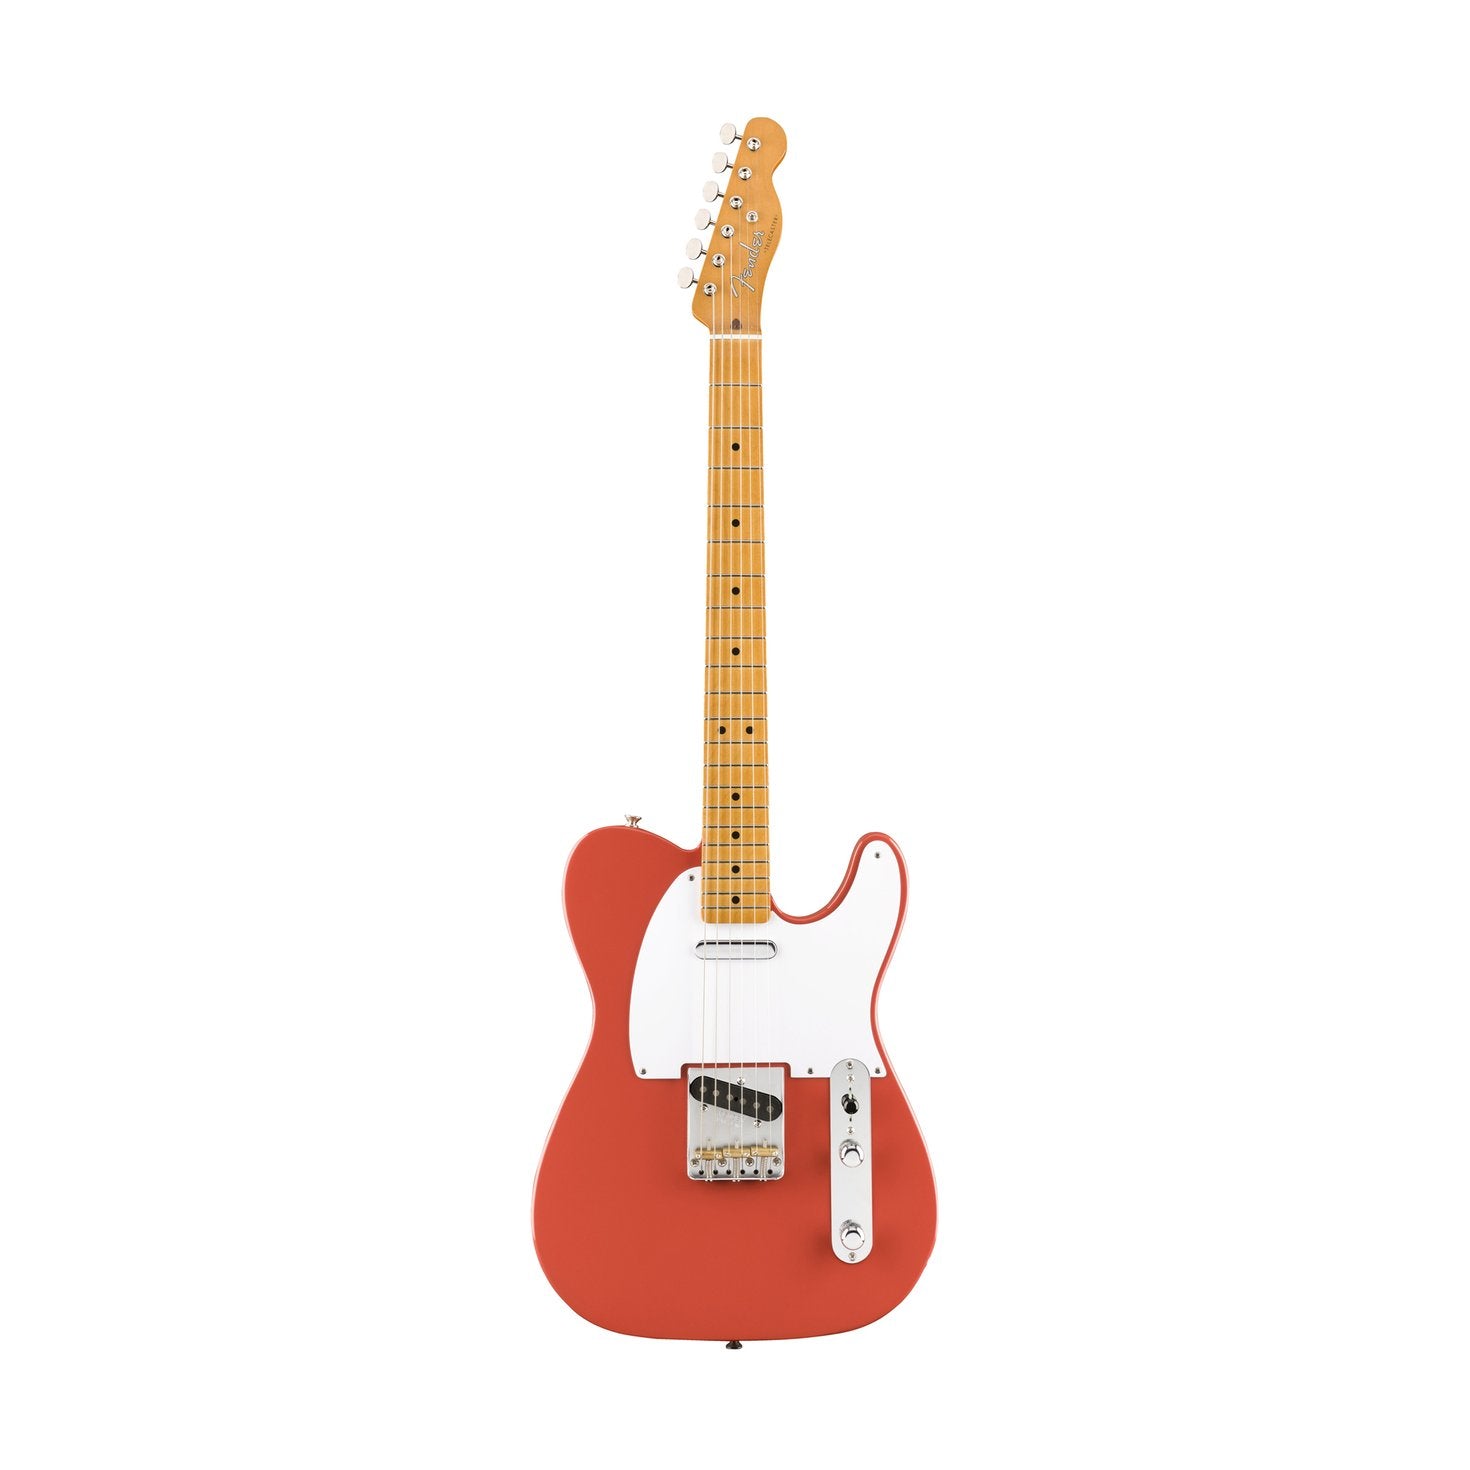 Fender Vintera 50s Telecaster Electric Guitar, Maple FB, Fiesta Red, FENDER, ELECTRIC GUITAR, fender-eletric-guitar-f03-014-9852-340, ZOSO MUSIC SDN BHD